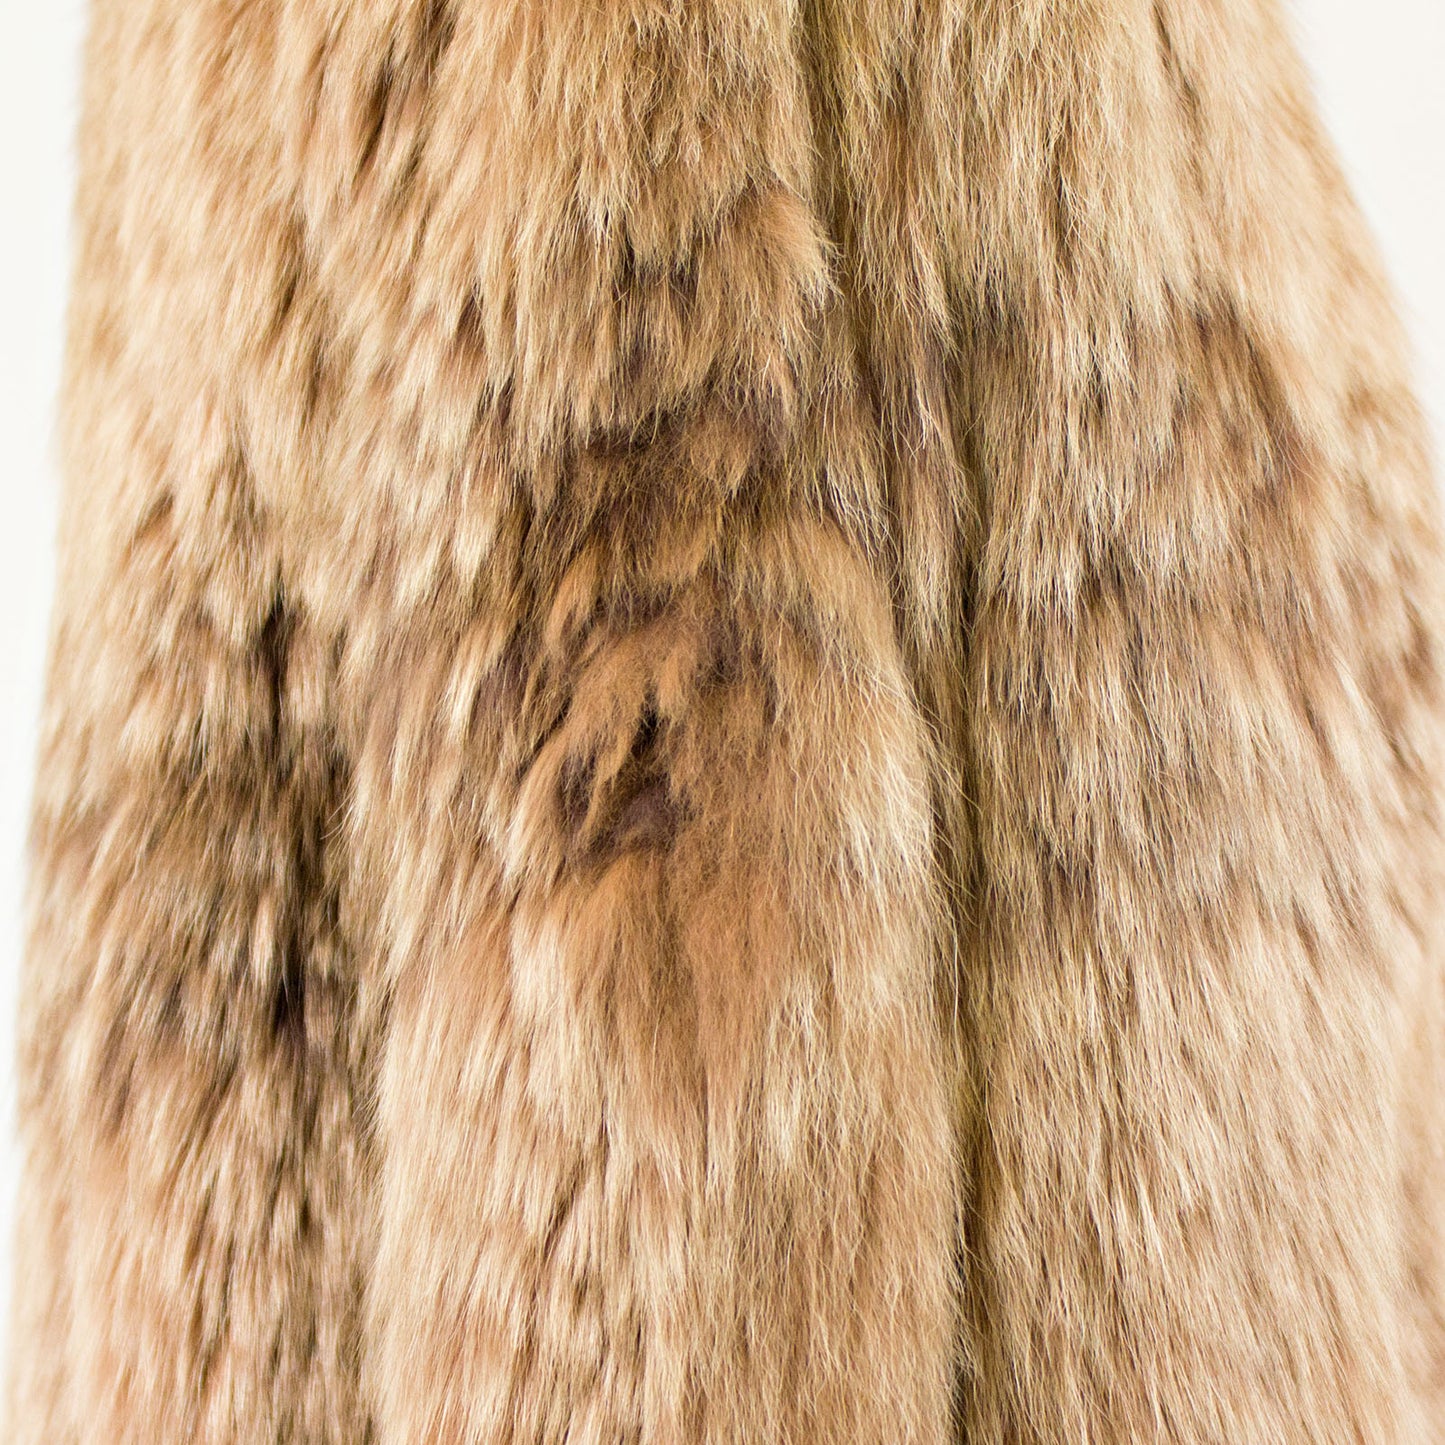 Brown Fox Coat - Size M